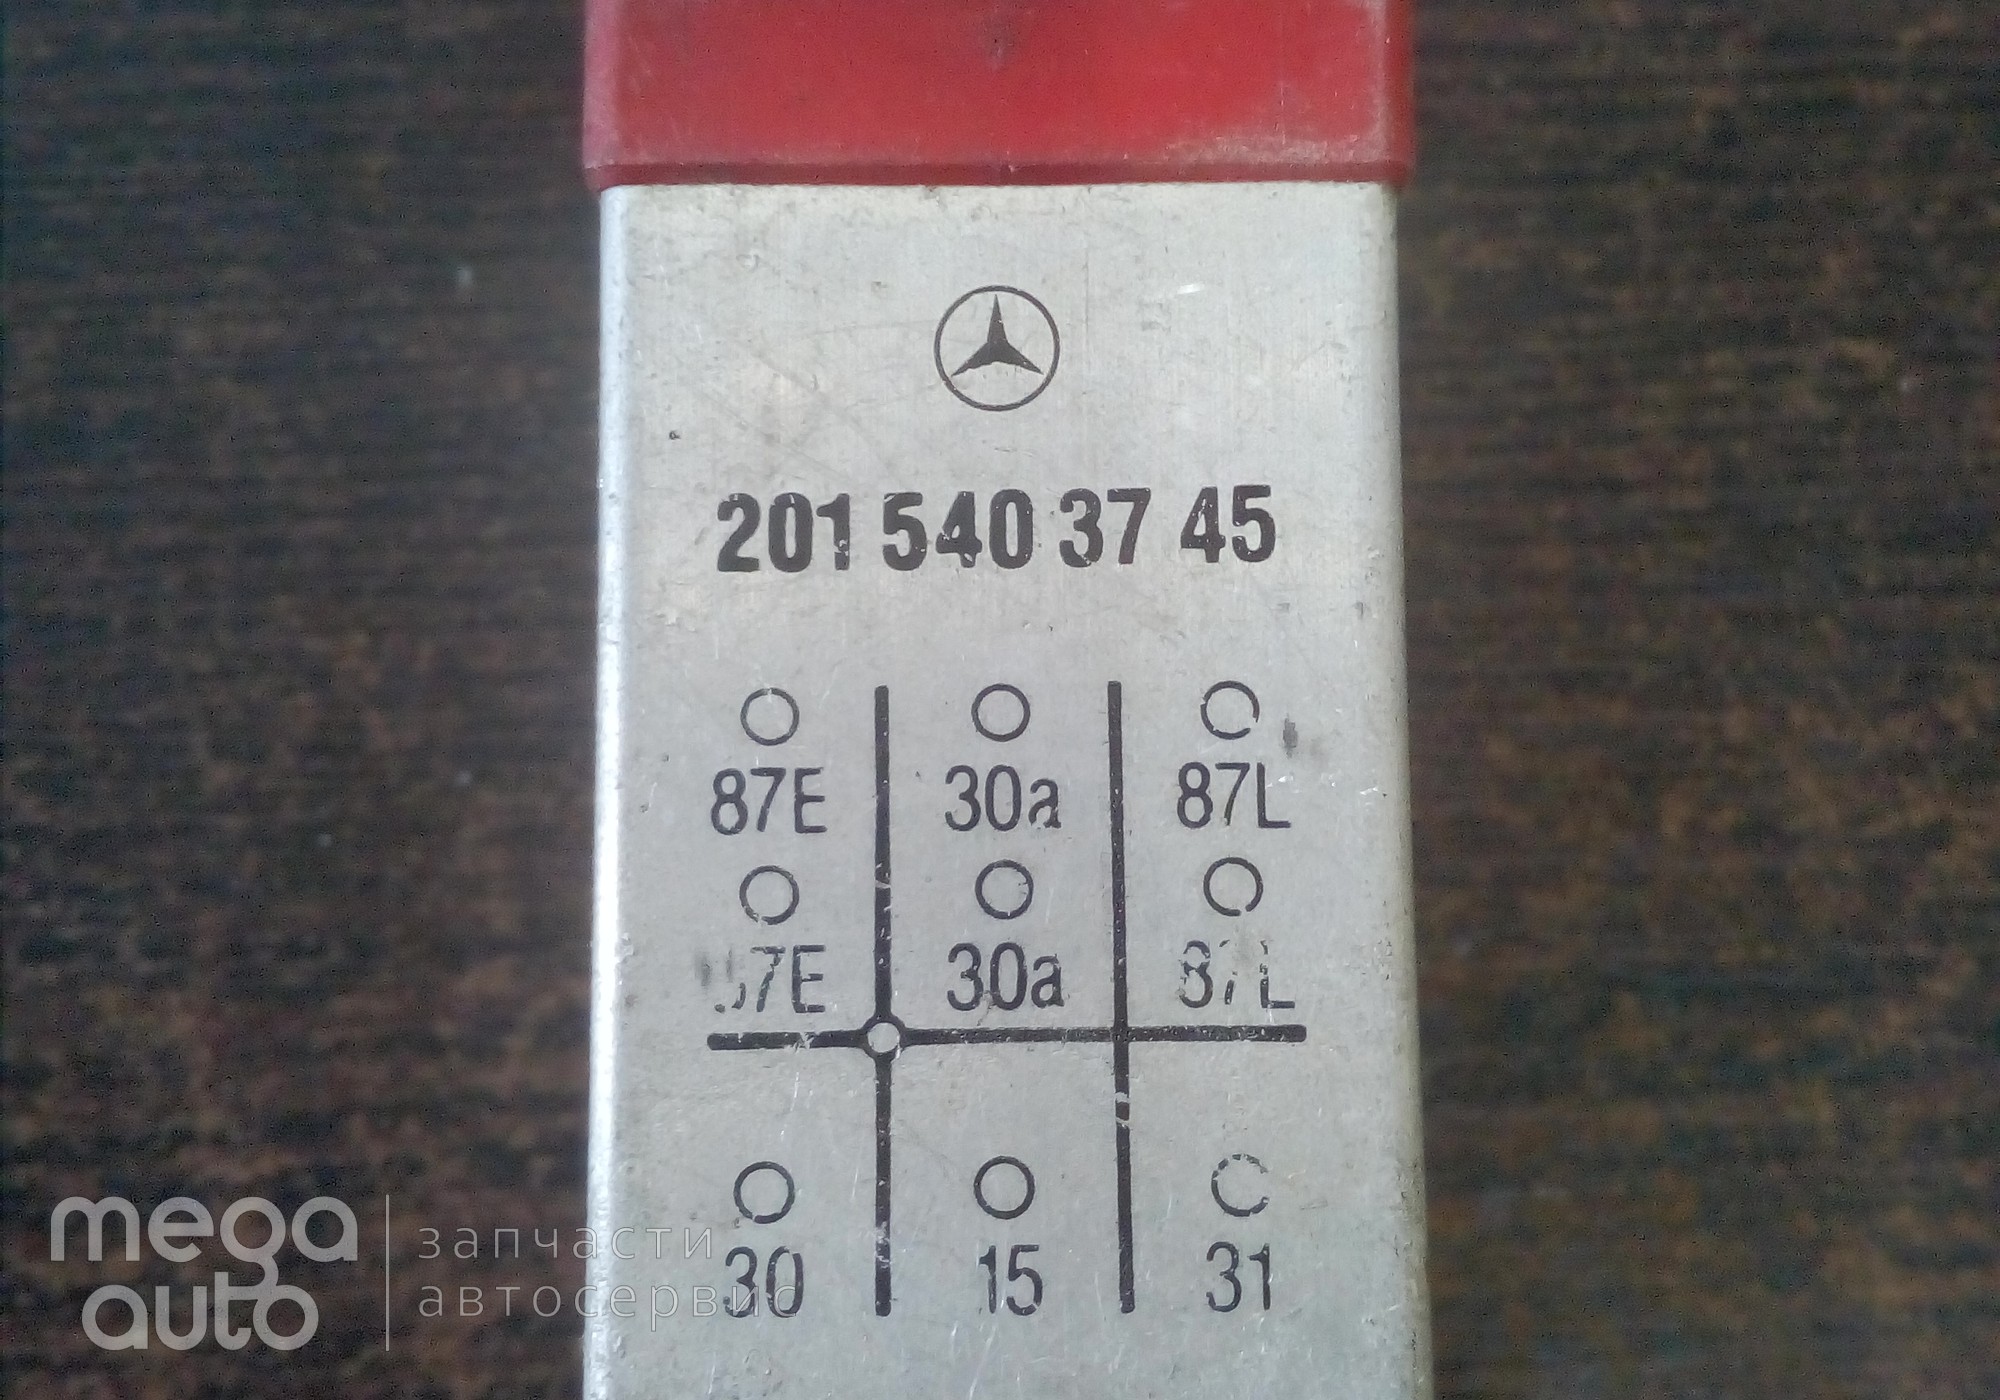 2015403745 Реле перегрузки мерседес для Mercedes-Benz 190 W201 (с 1982 по 1993)